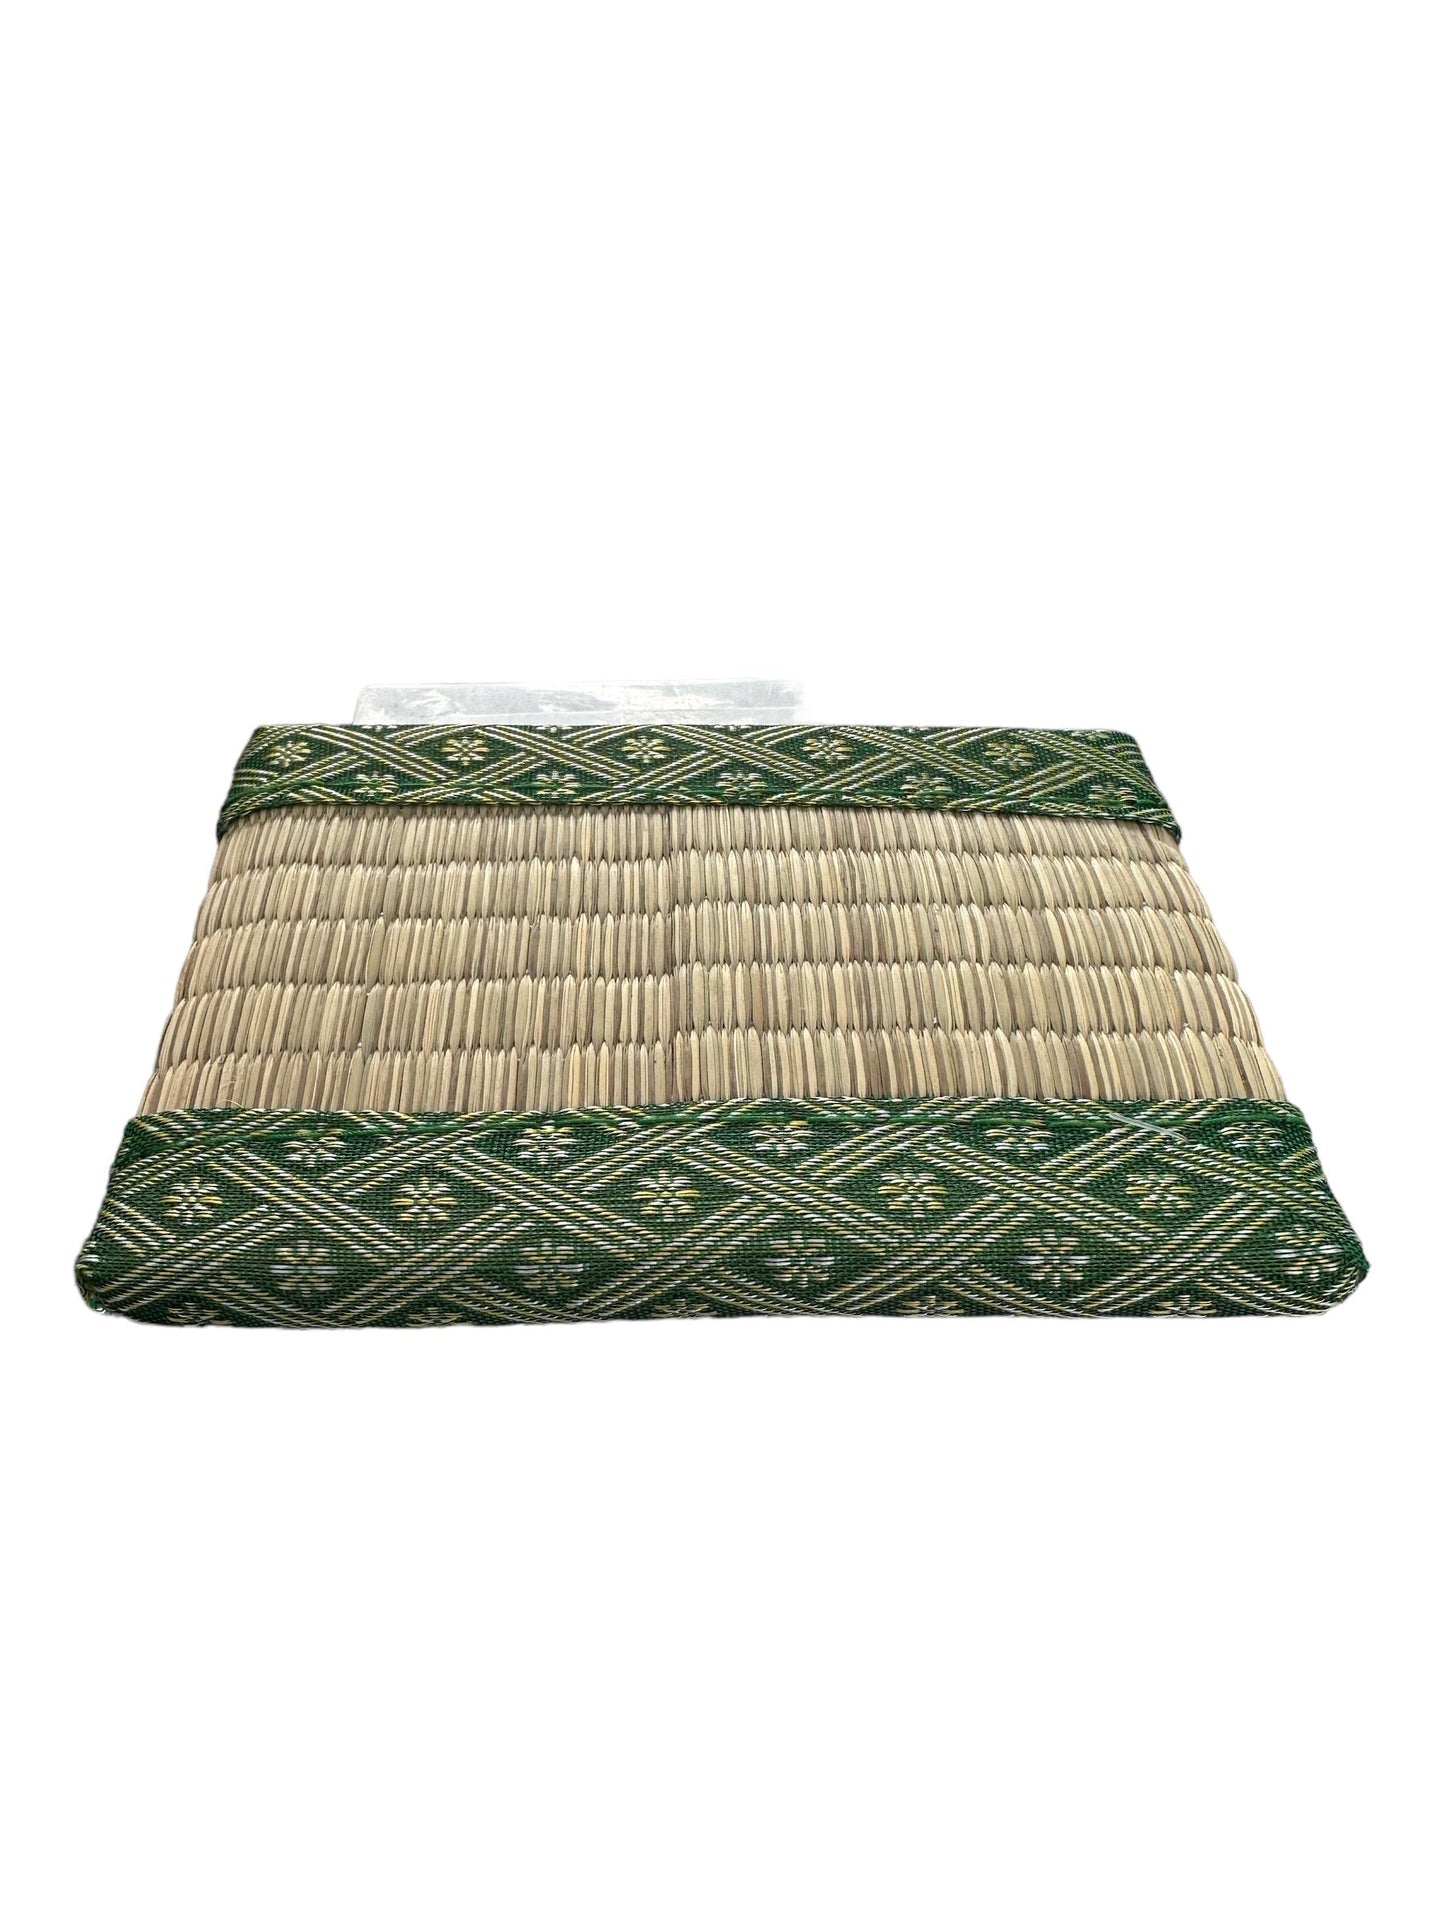 Small tatami mat, made in Japan 2" x 3.5"